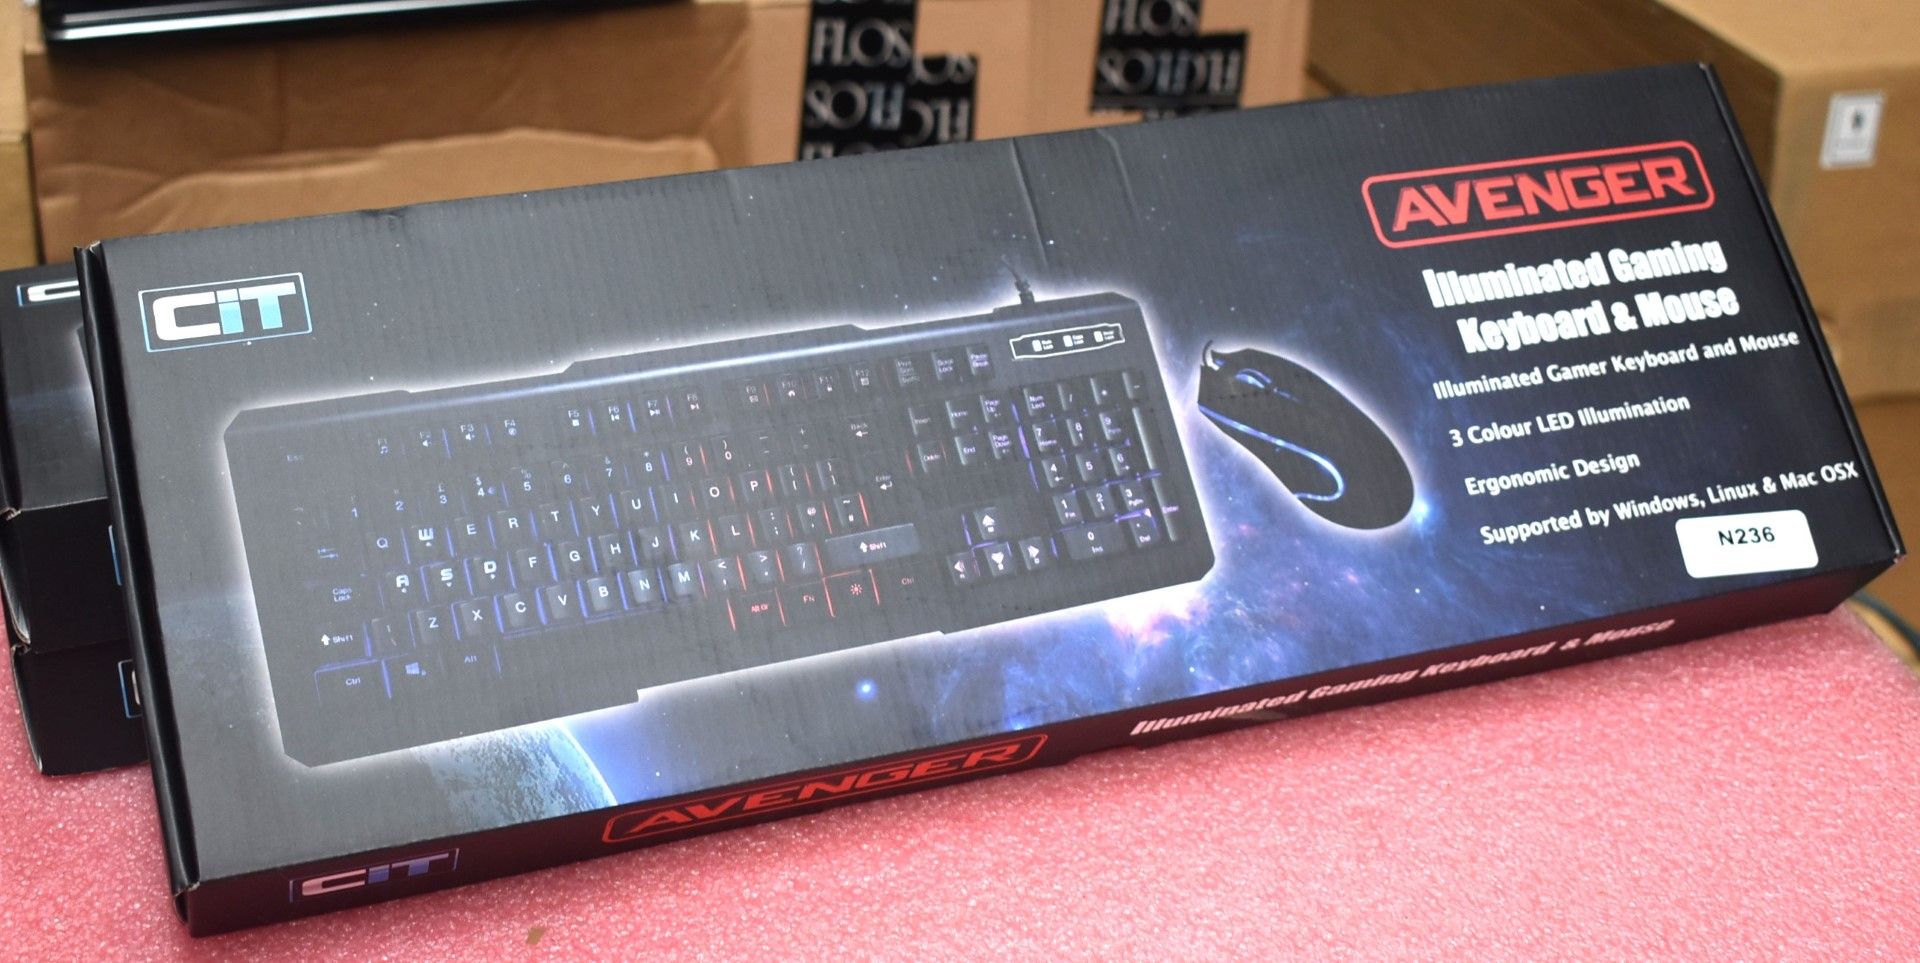 3 x CIT Avenger Illuminated Gaming Keyboard and Mouse - New & Boxed - Image 4 of 7